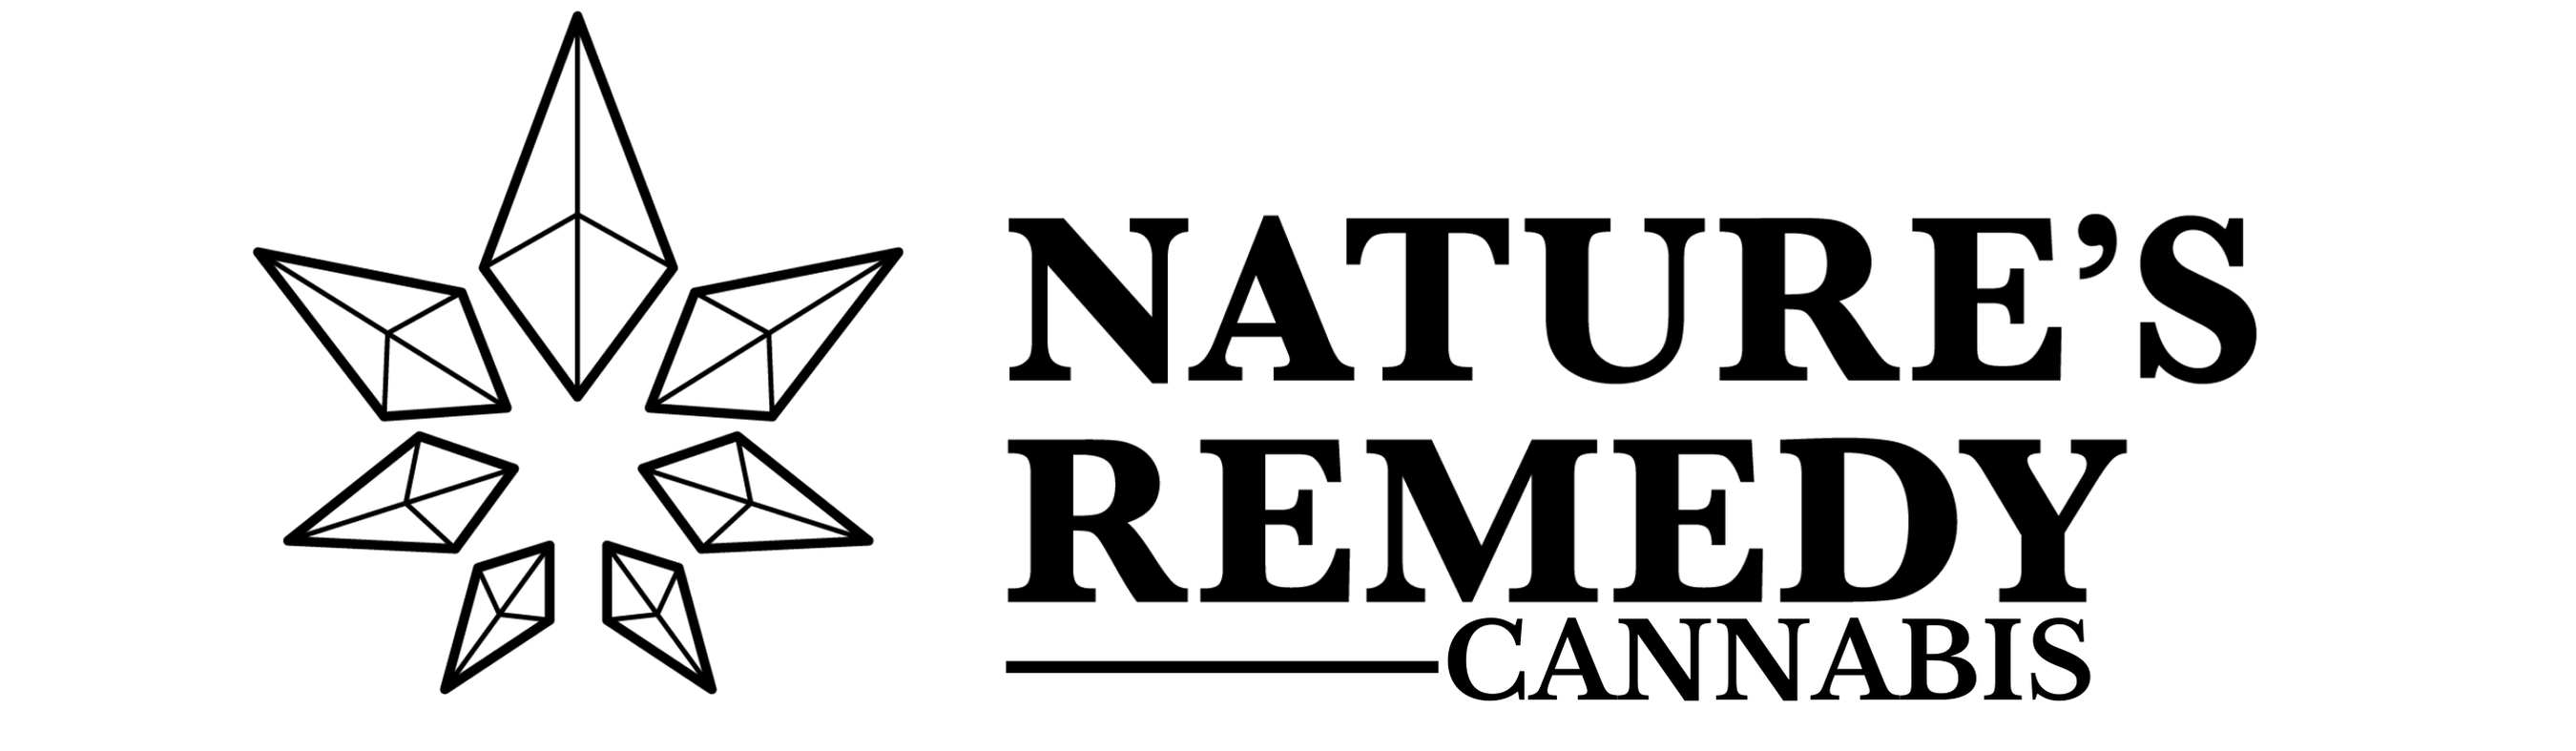 black logo (1) (1)